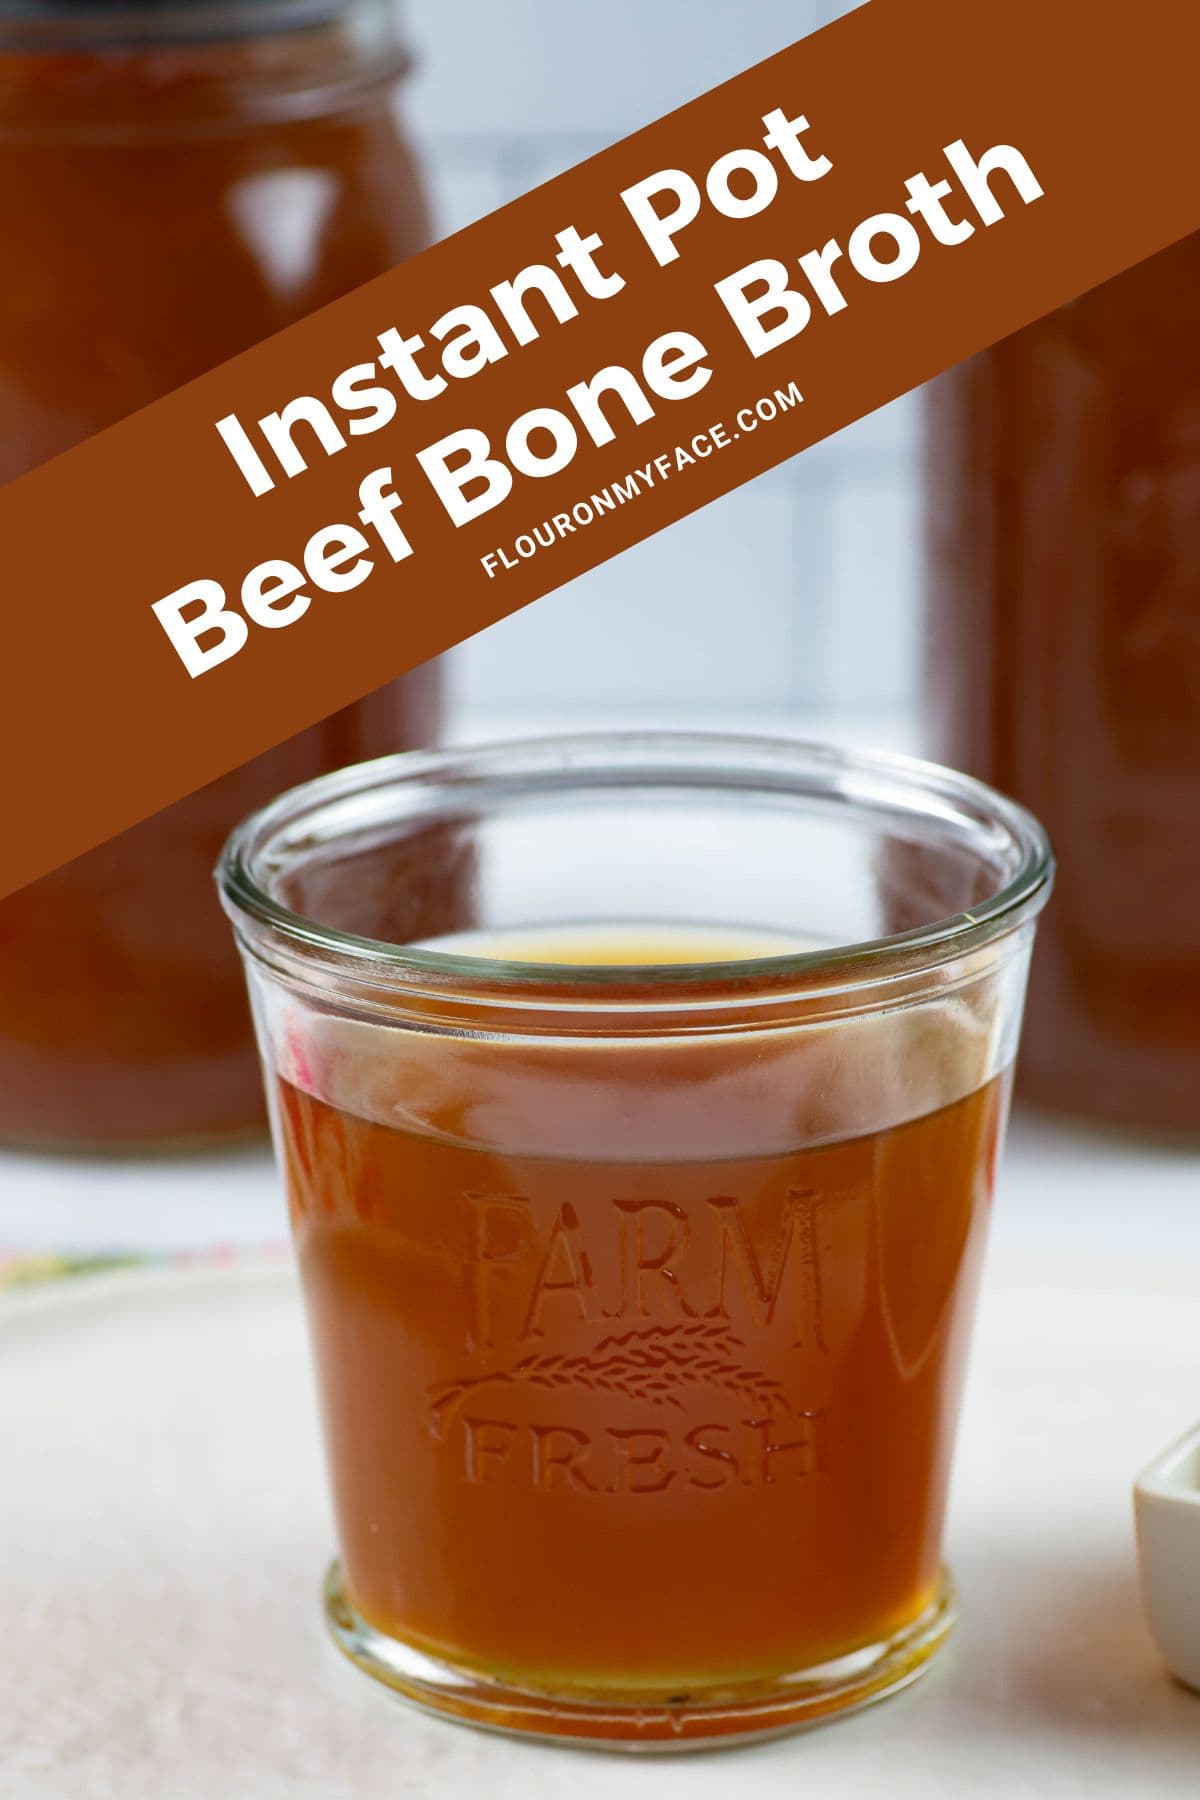 Instant Pot Beef Bone Broth recipe featured image.